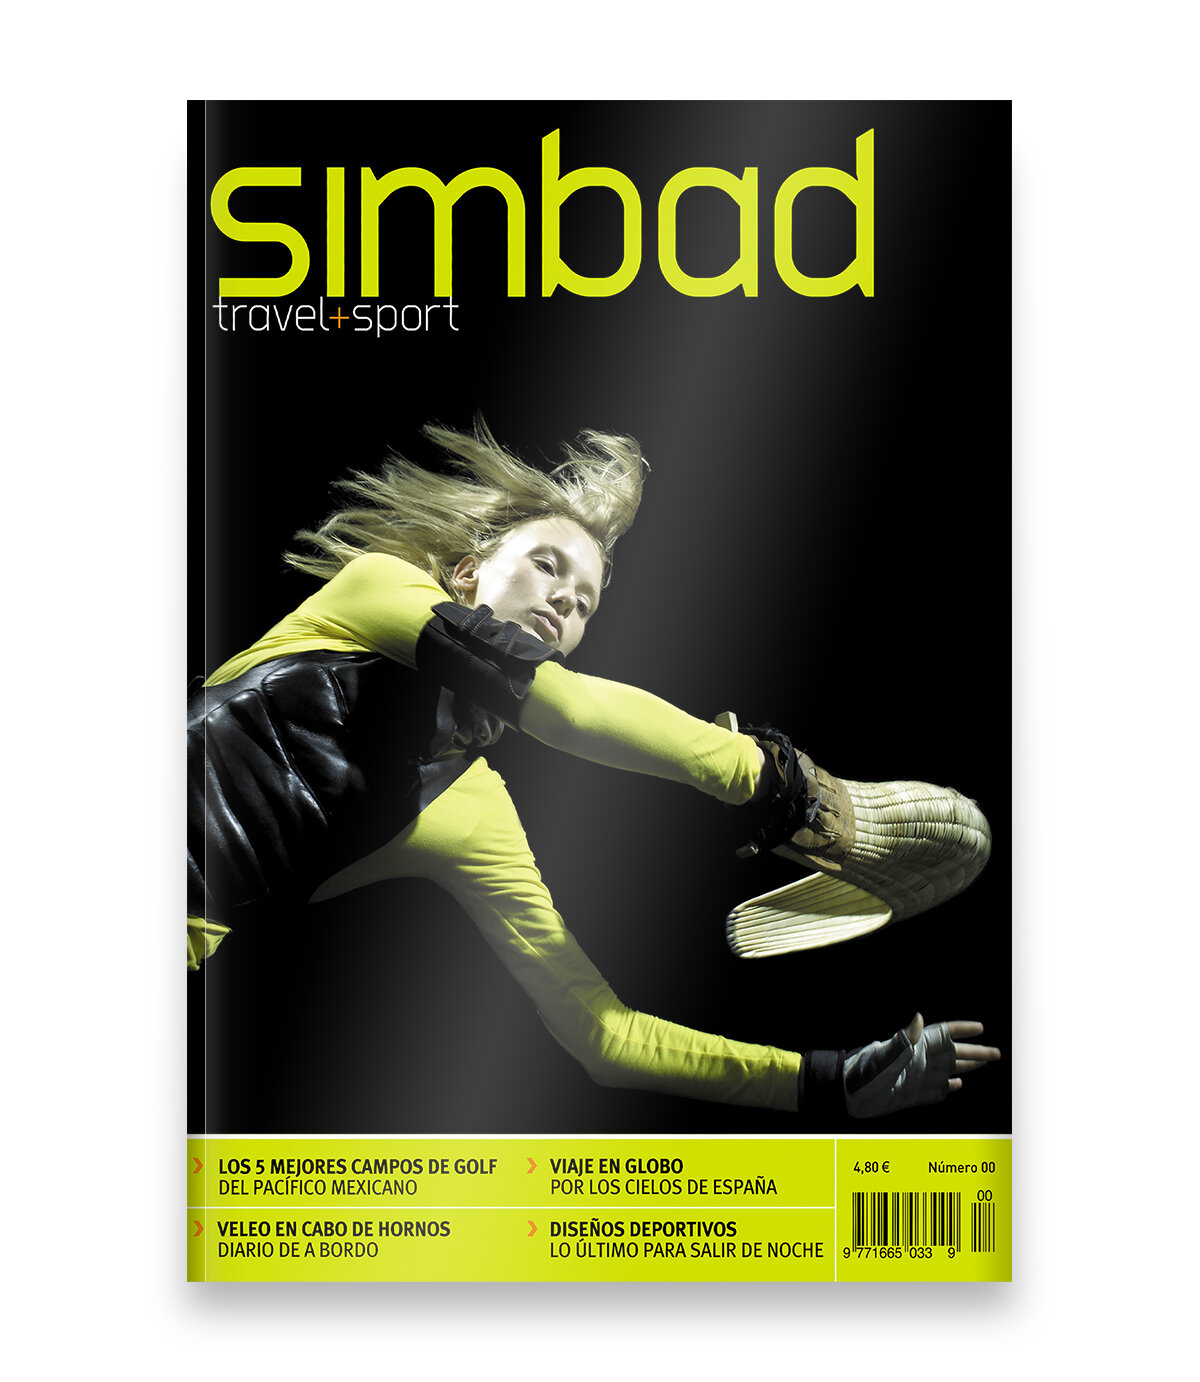 Simbad travel+sport